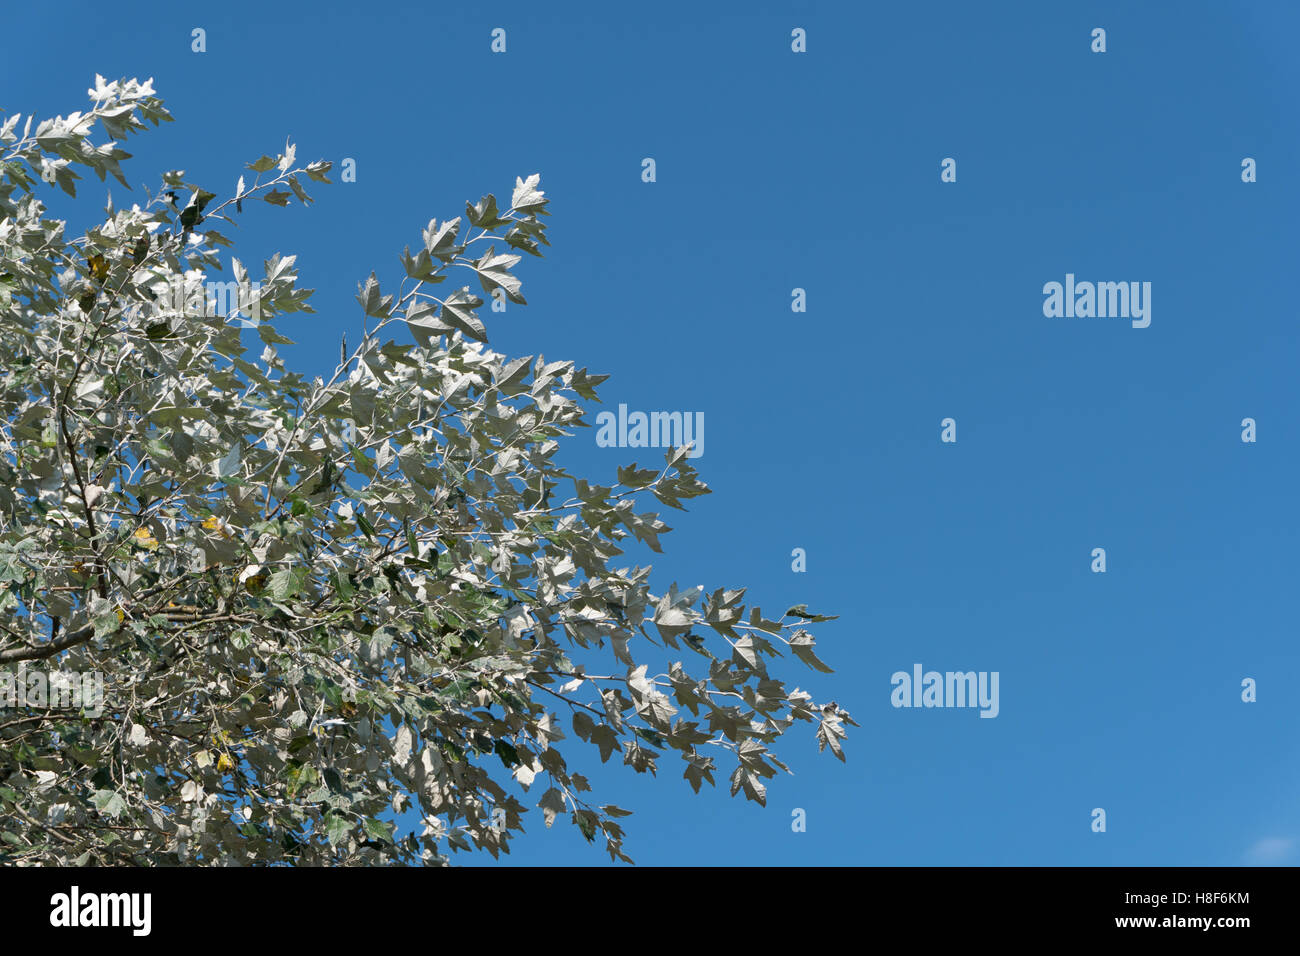 Leafs of the silverleaf poplar dance in the wind. L. Populus alba,. E. abele, silver poplar, silverleaf poplar, white poplar Stock Photo